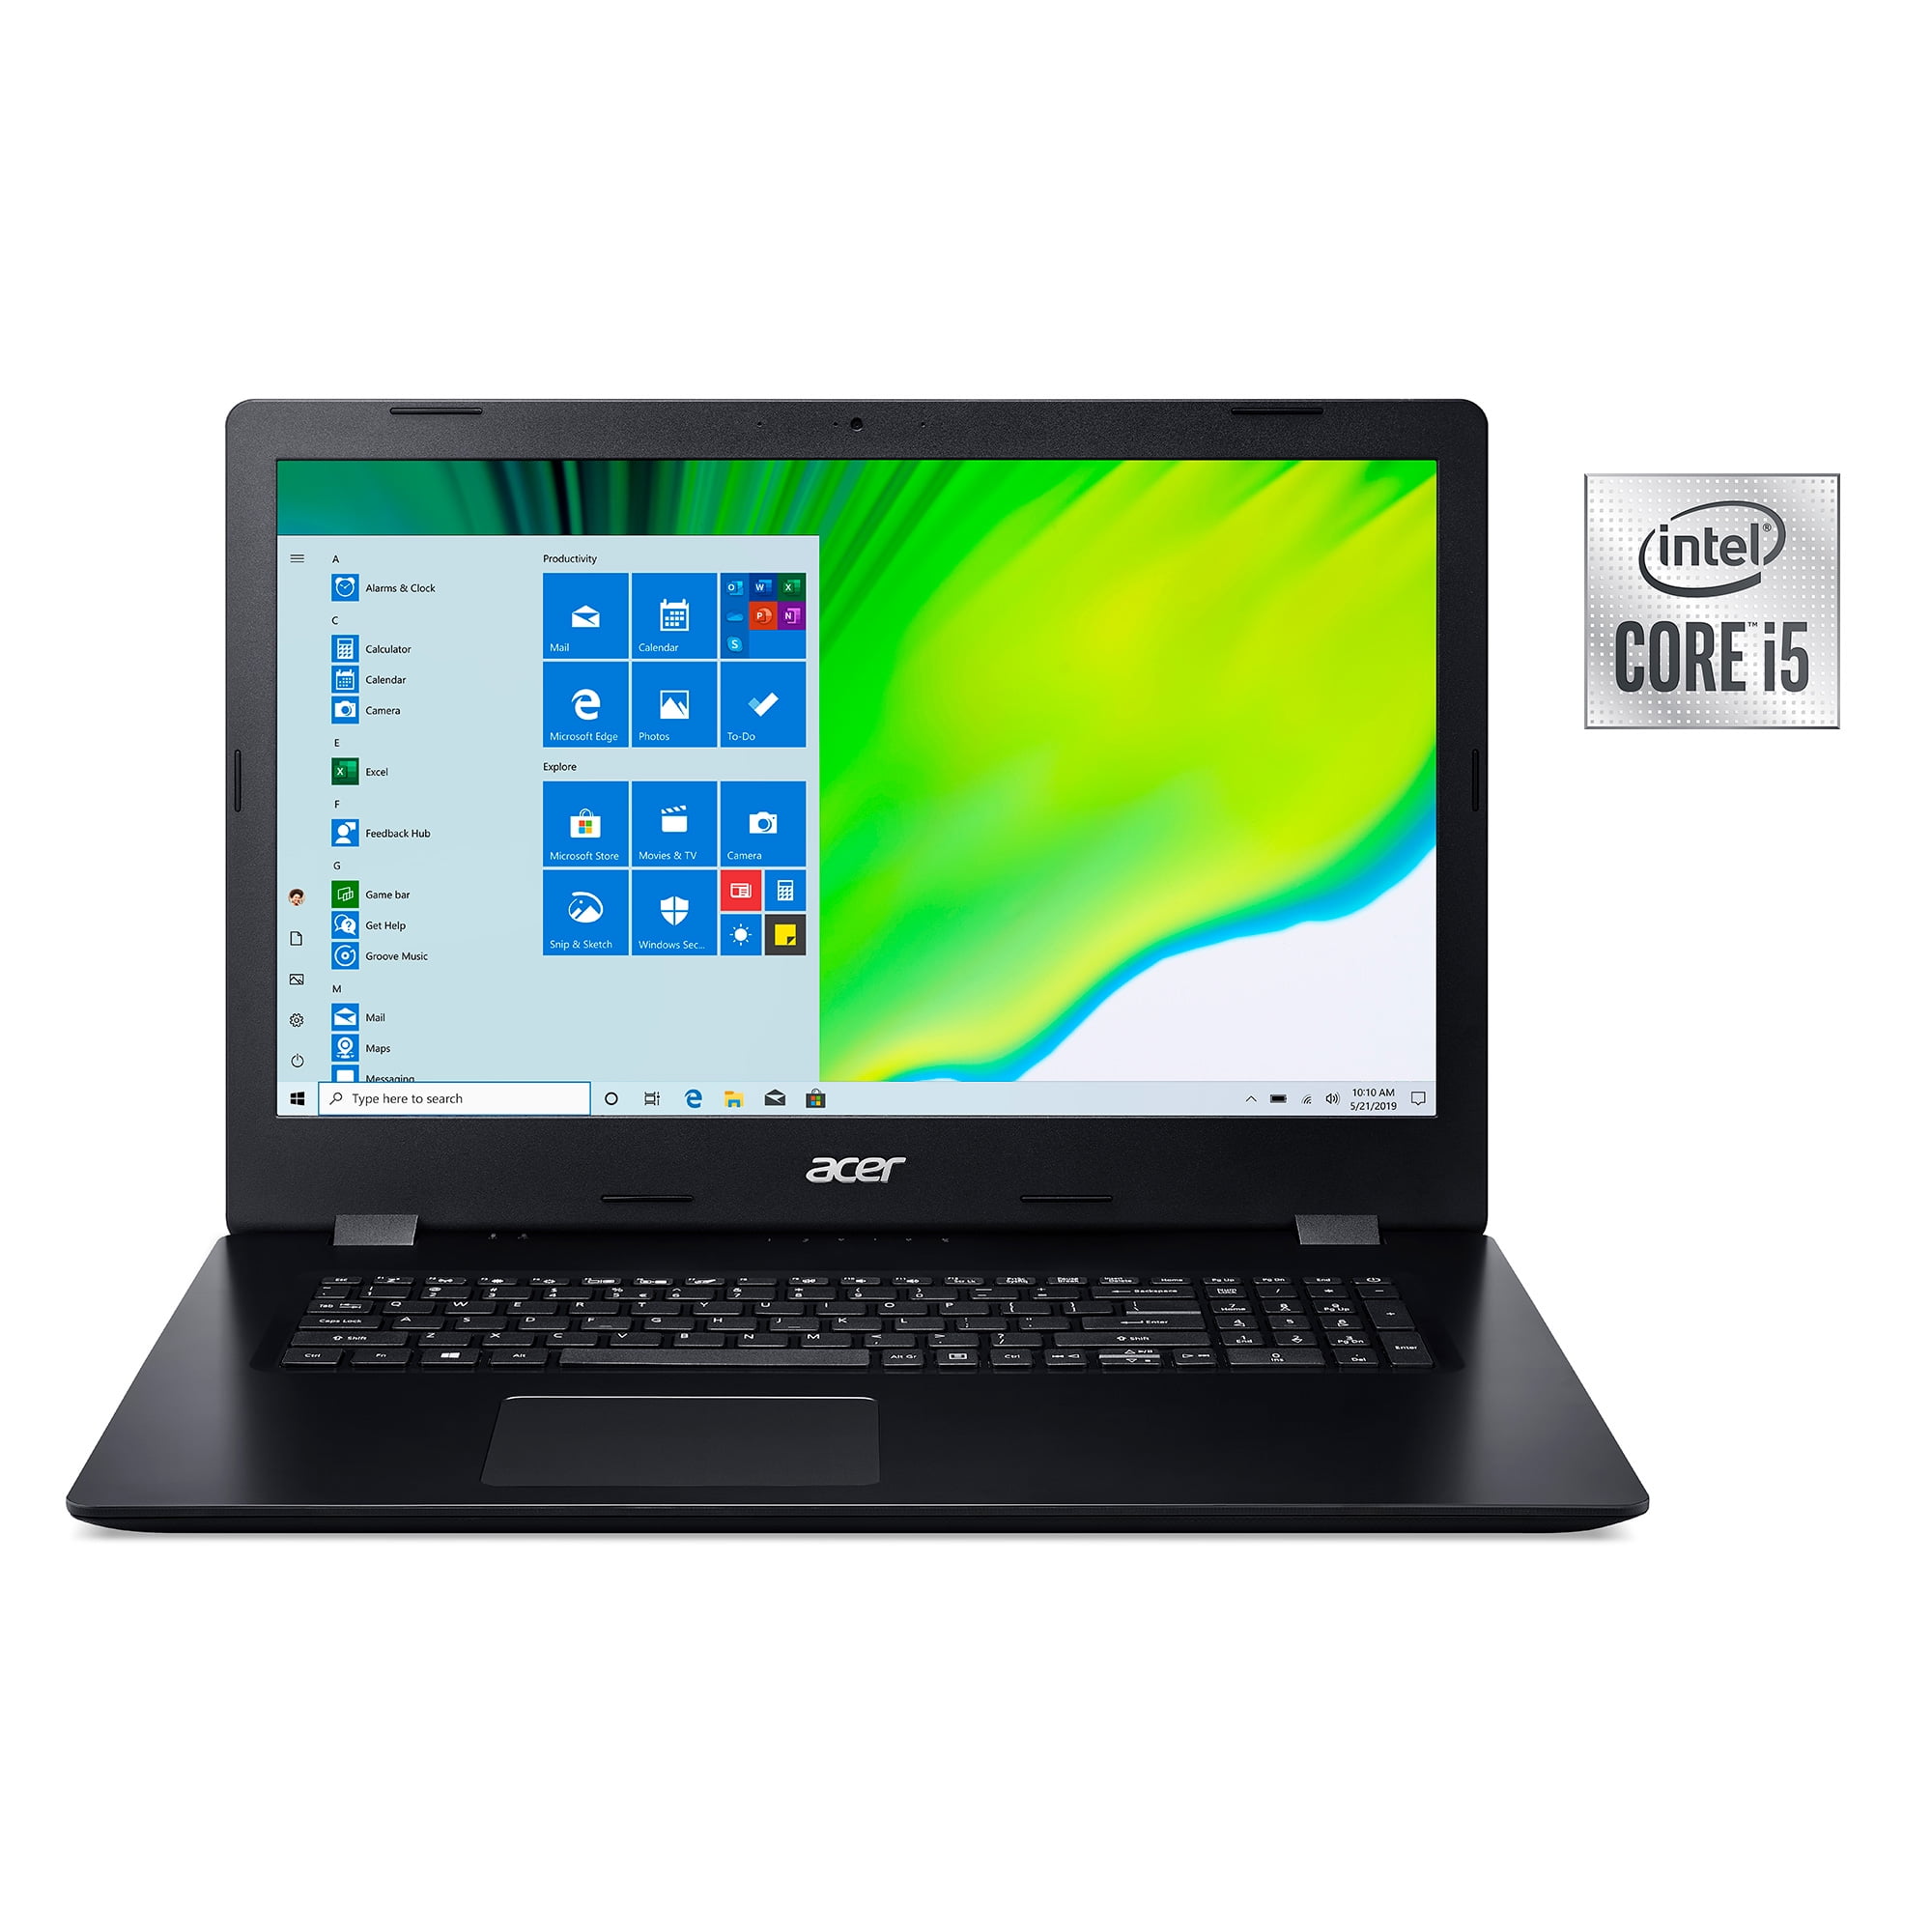 mammal liner radius Acer Aspire 3 Laptop, 17.3'' HD, Intel Core i5-1035G1, 8GB RAM, 1TB HDD,  Intel UHD Graphics, Windows 10, A317-52-569E - Walmart.com